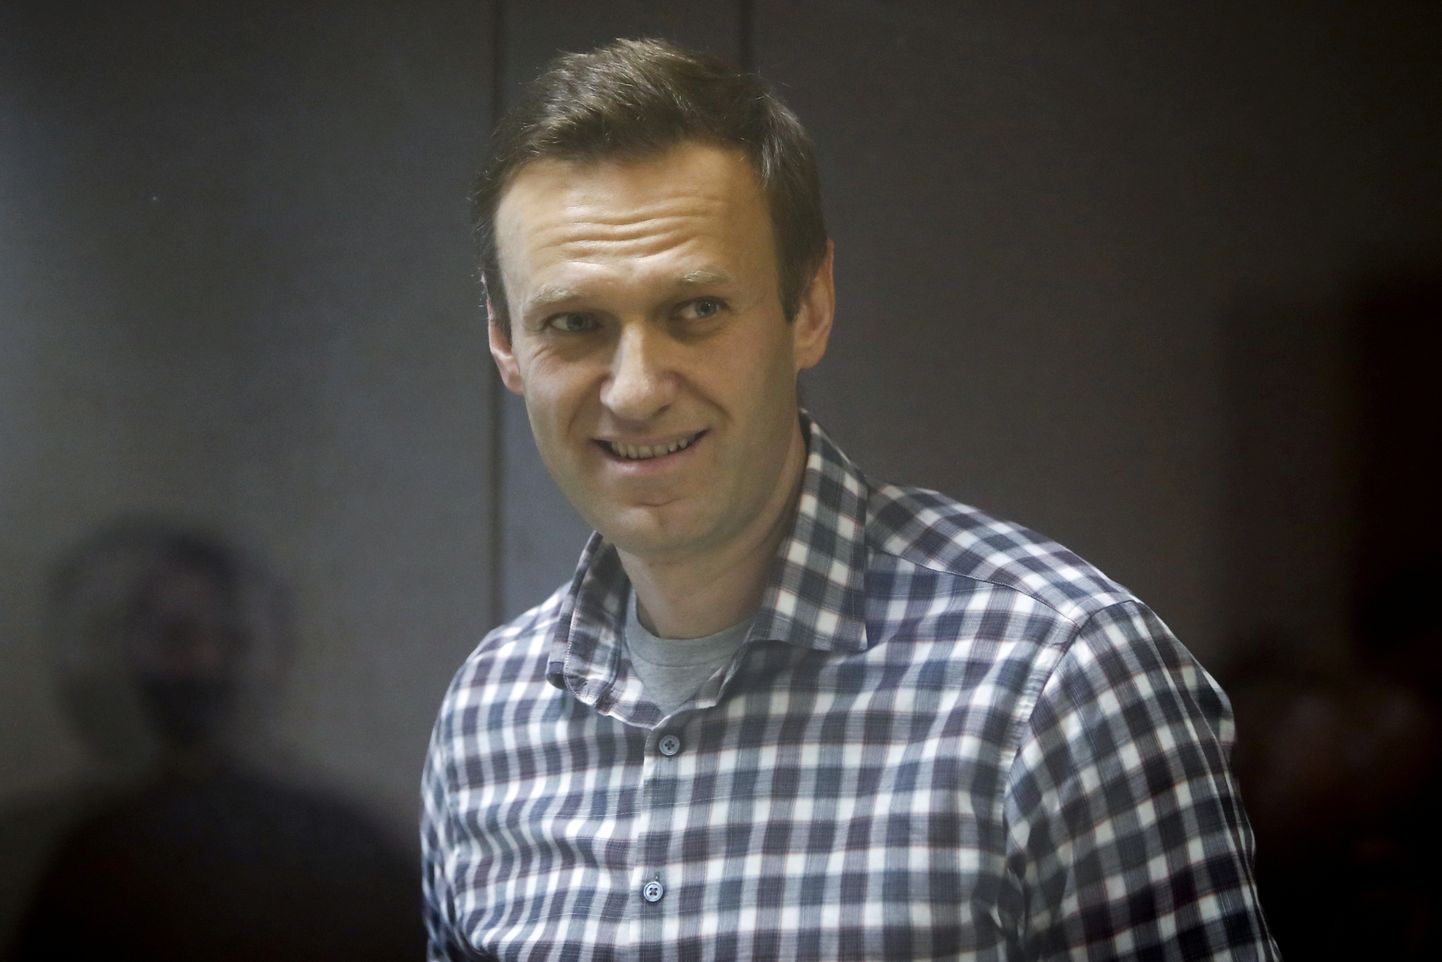 Aleksei Navalnõi.